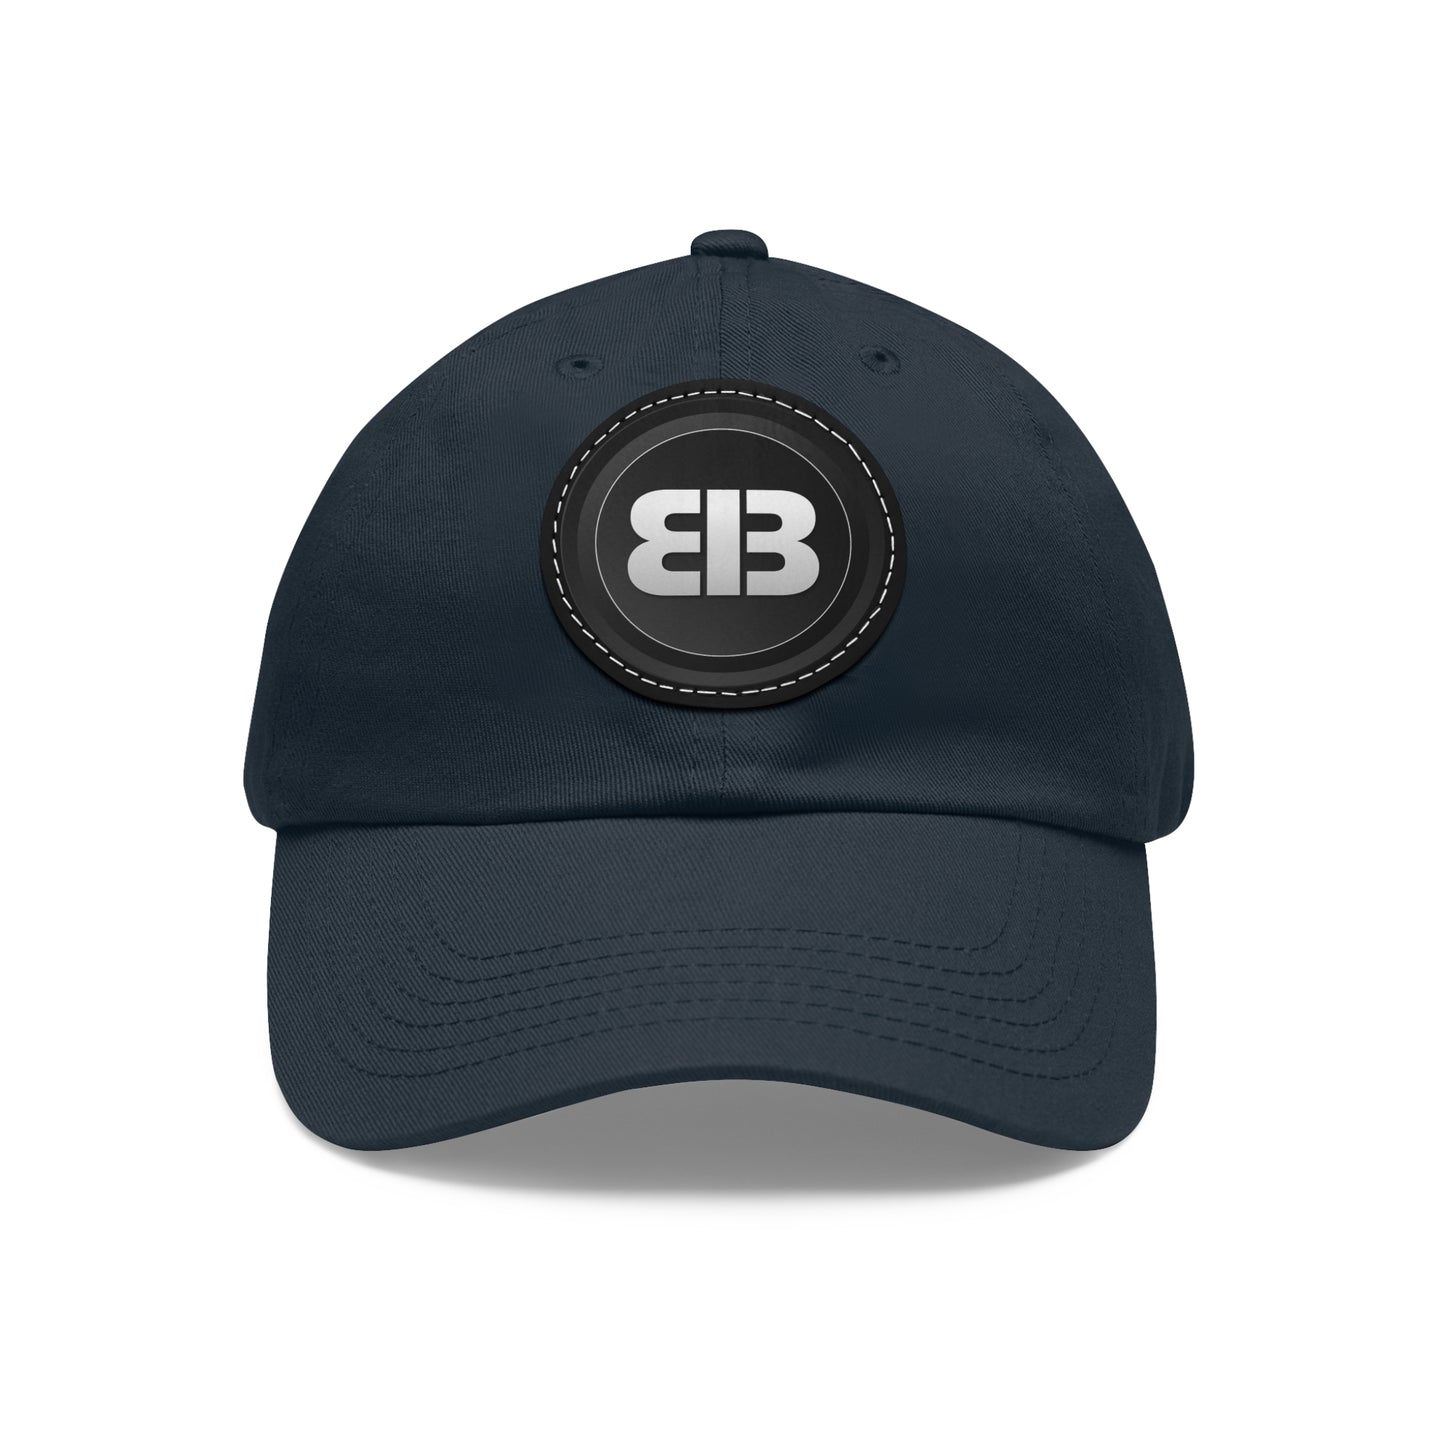 BB Emblem Round Leather Patch (Various Colors)